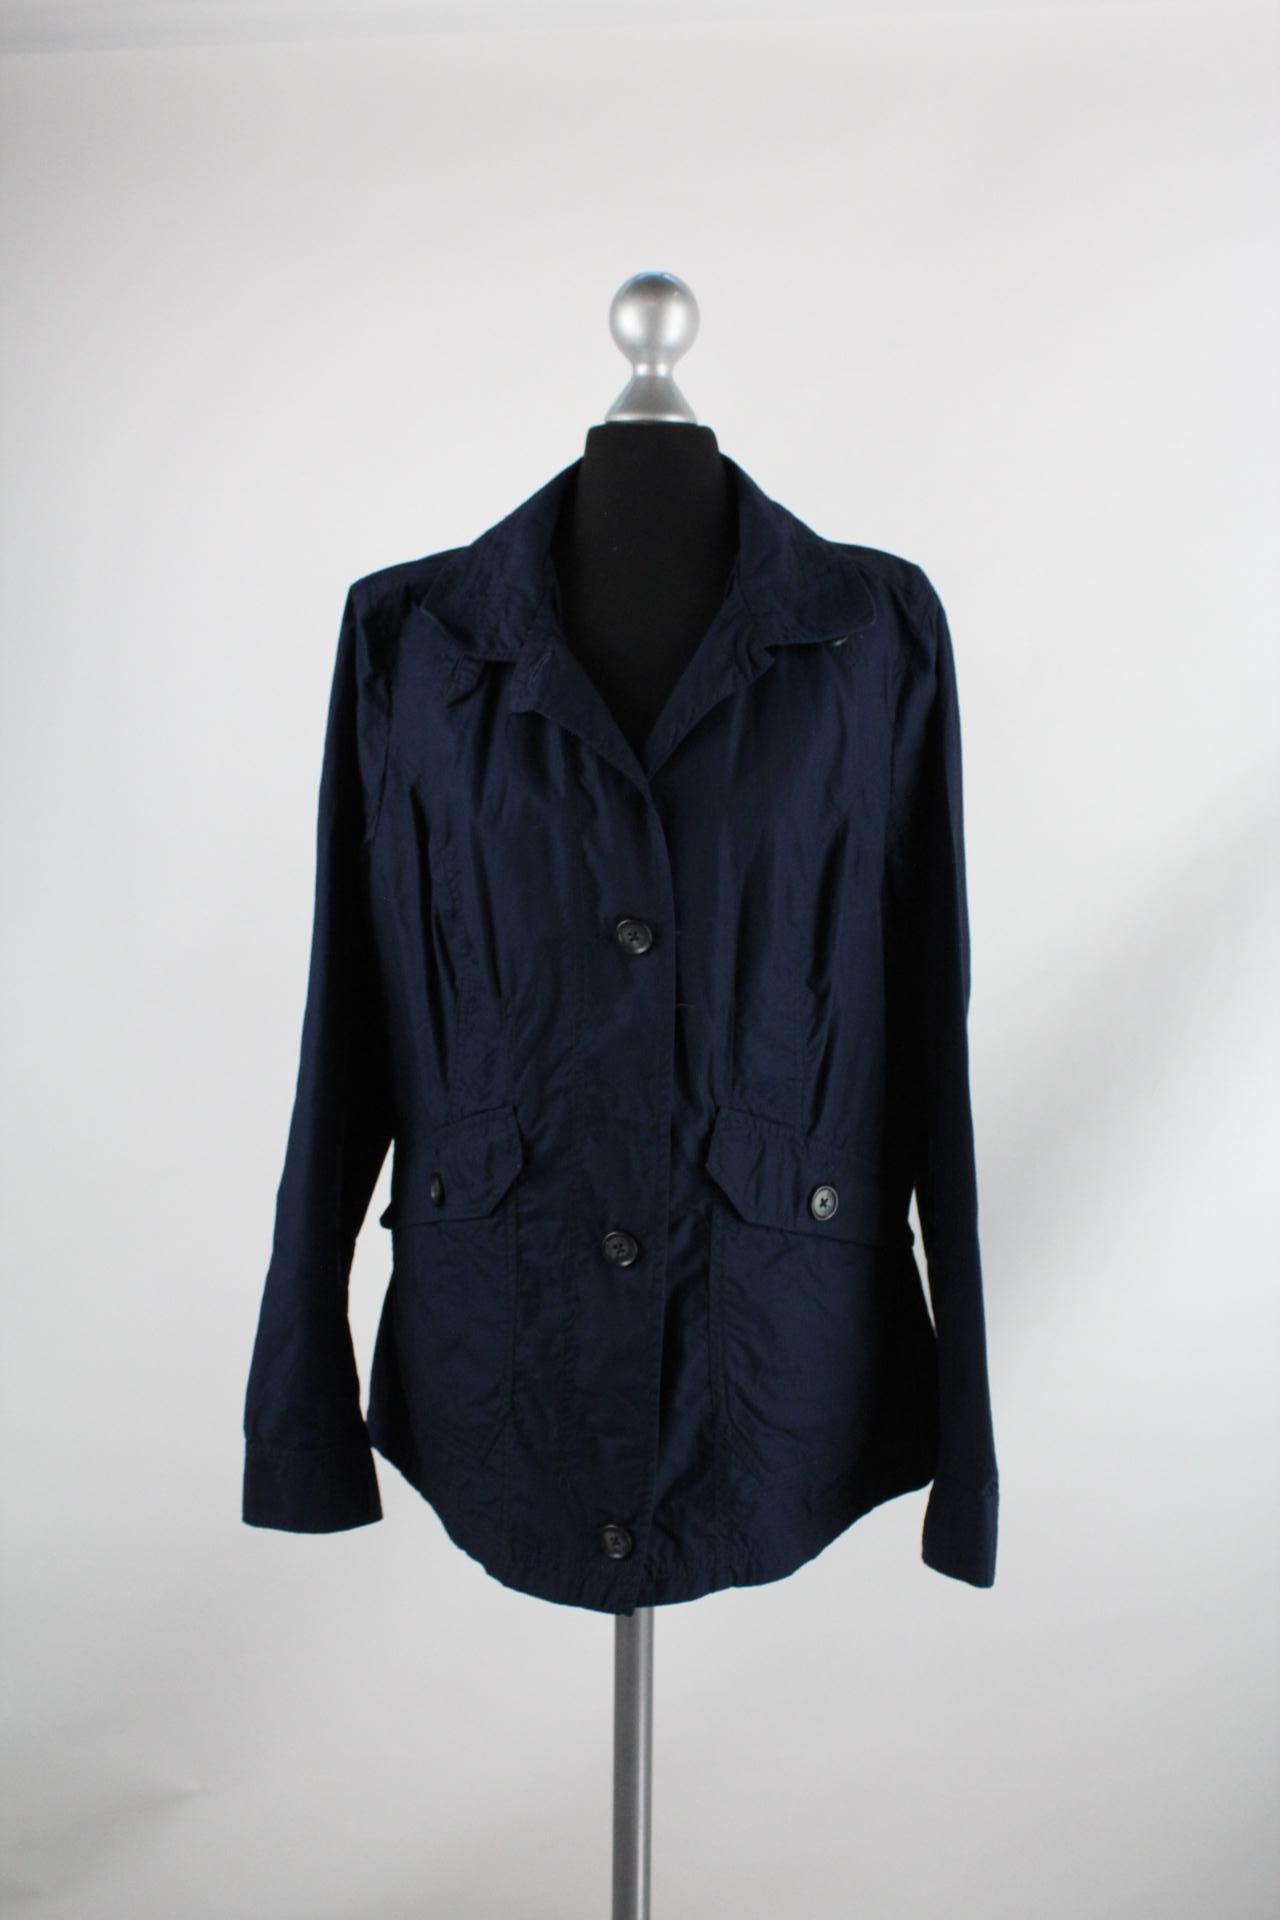 The Outerwear Damen-Jacke blau Größe 44